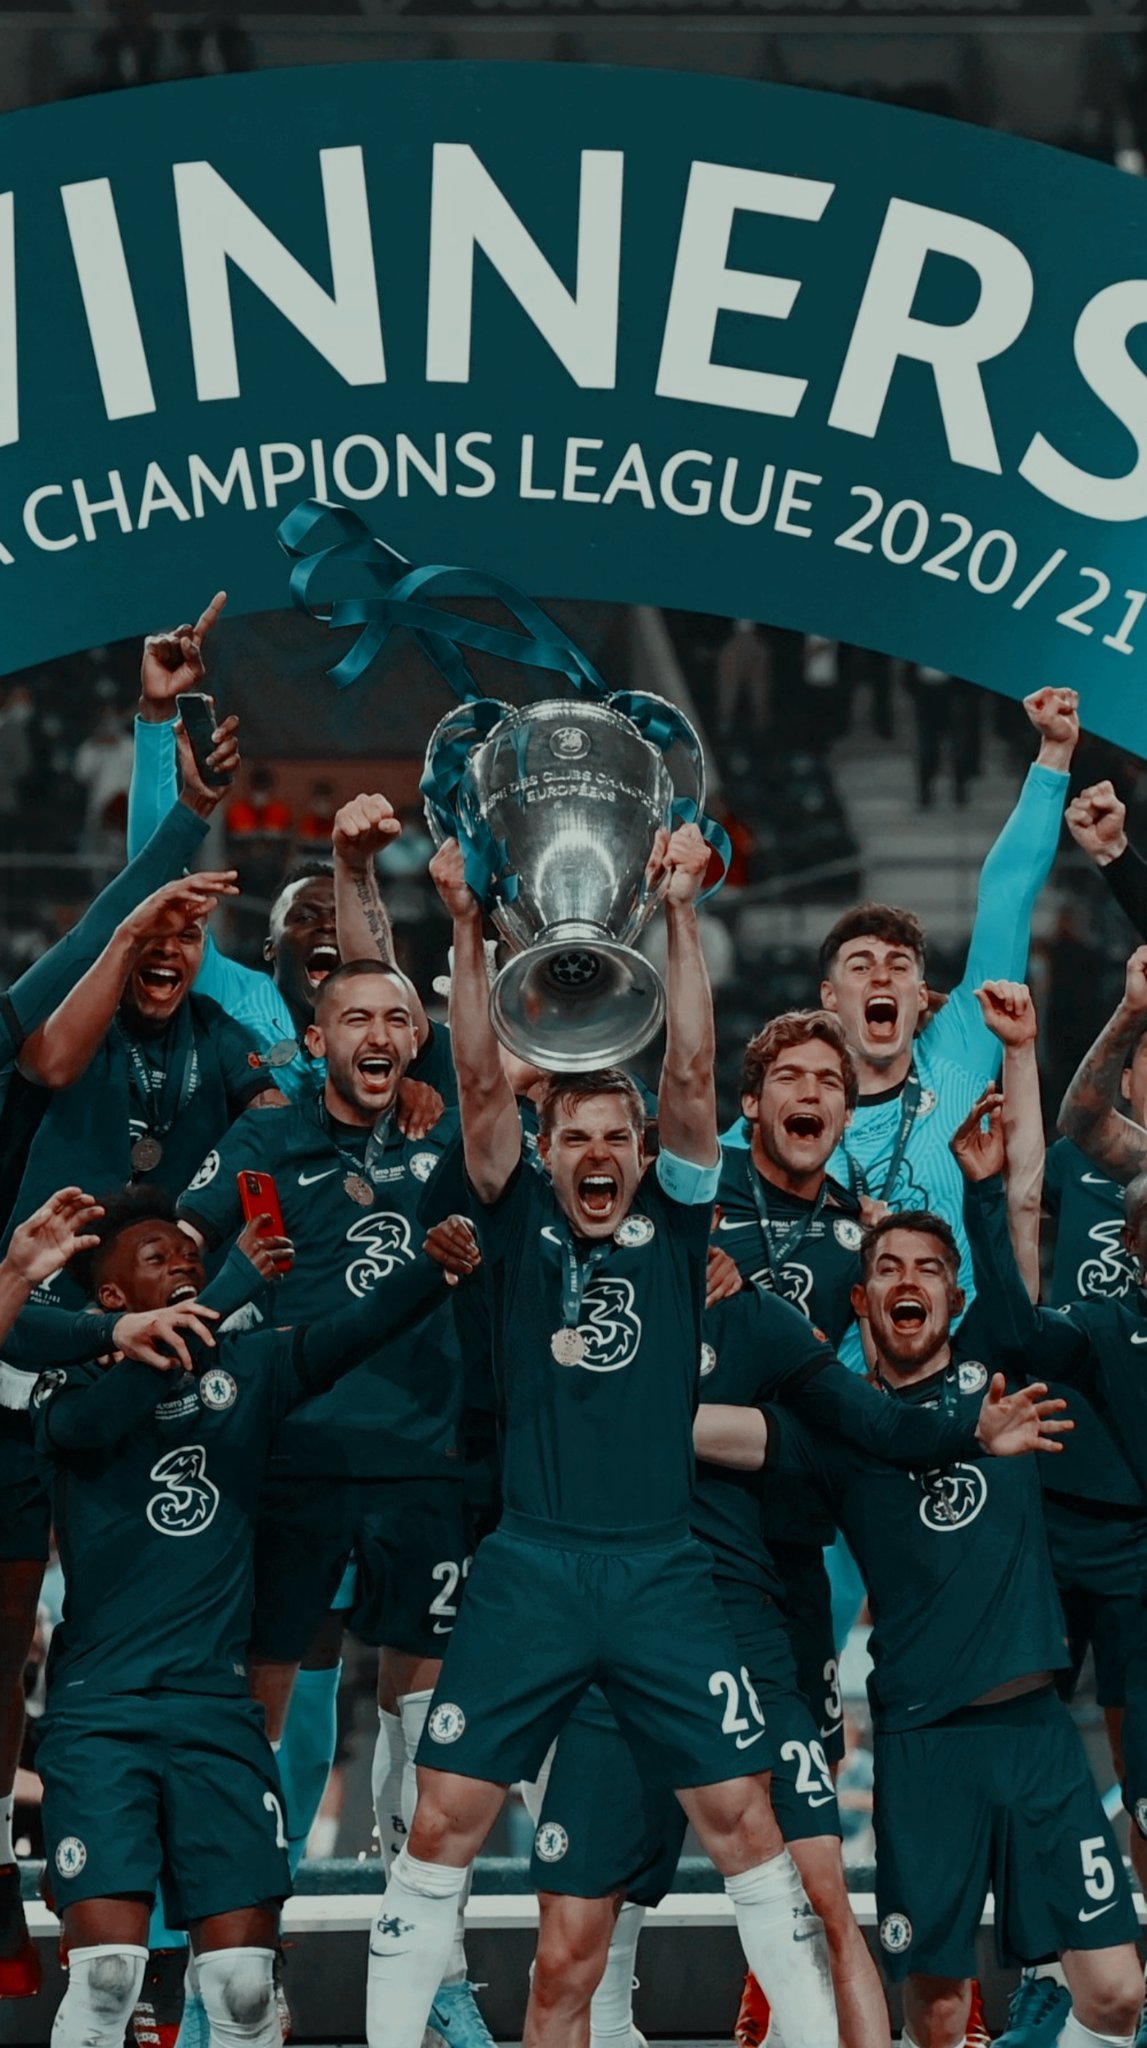 Uefa Champions League 2020 Wallpaper